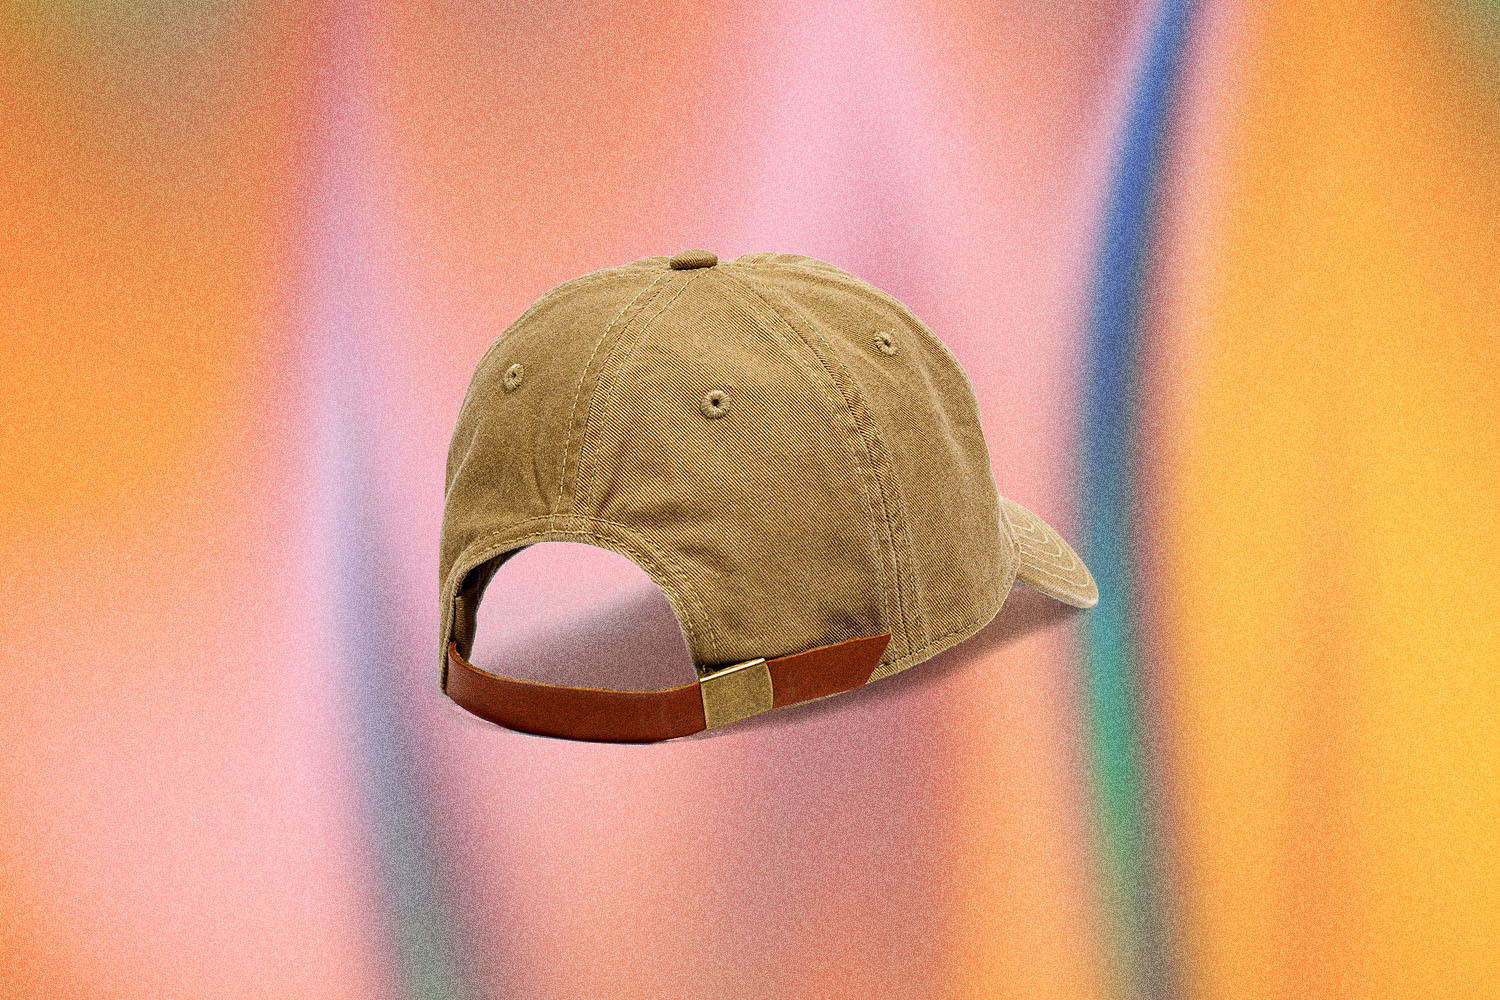 The Hottest Way to Wear Your Baseball Cap? Backwards - InsideHook